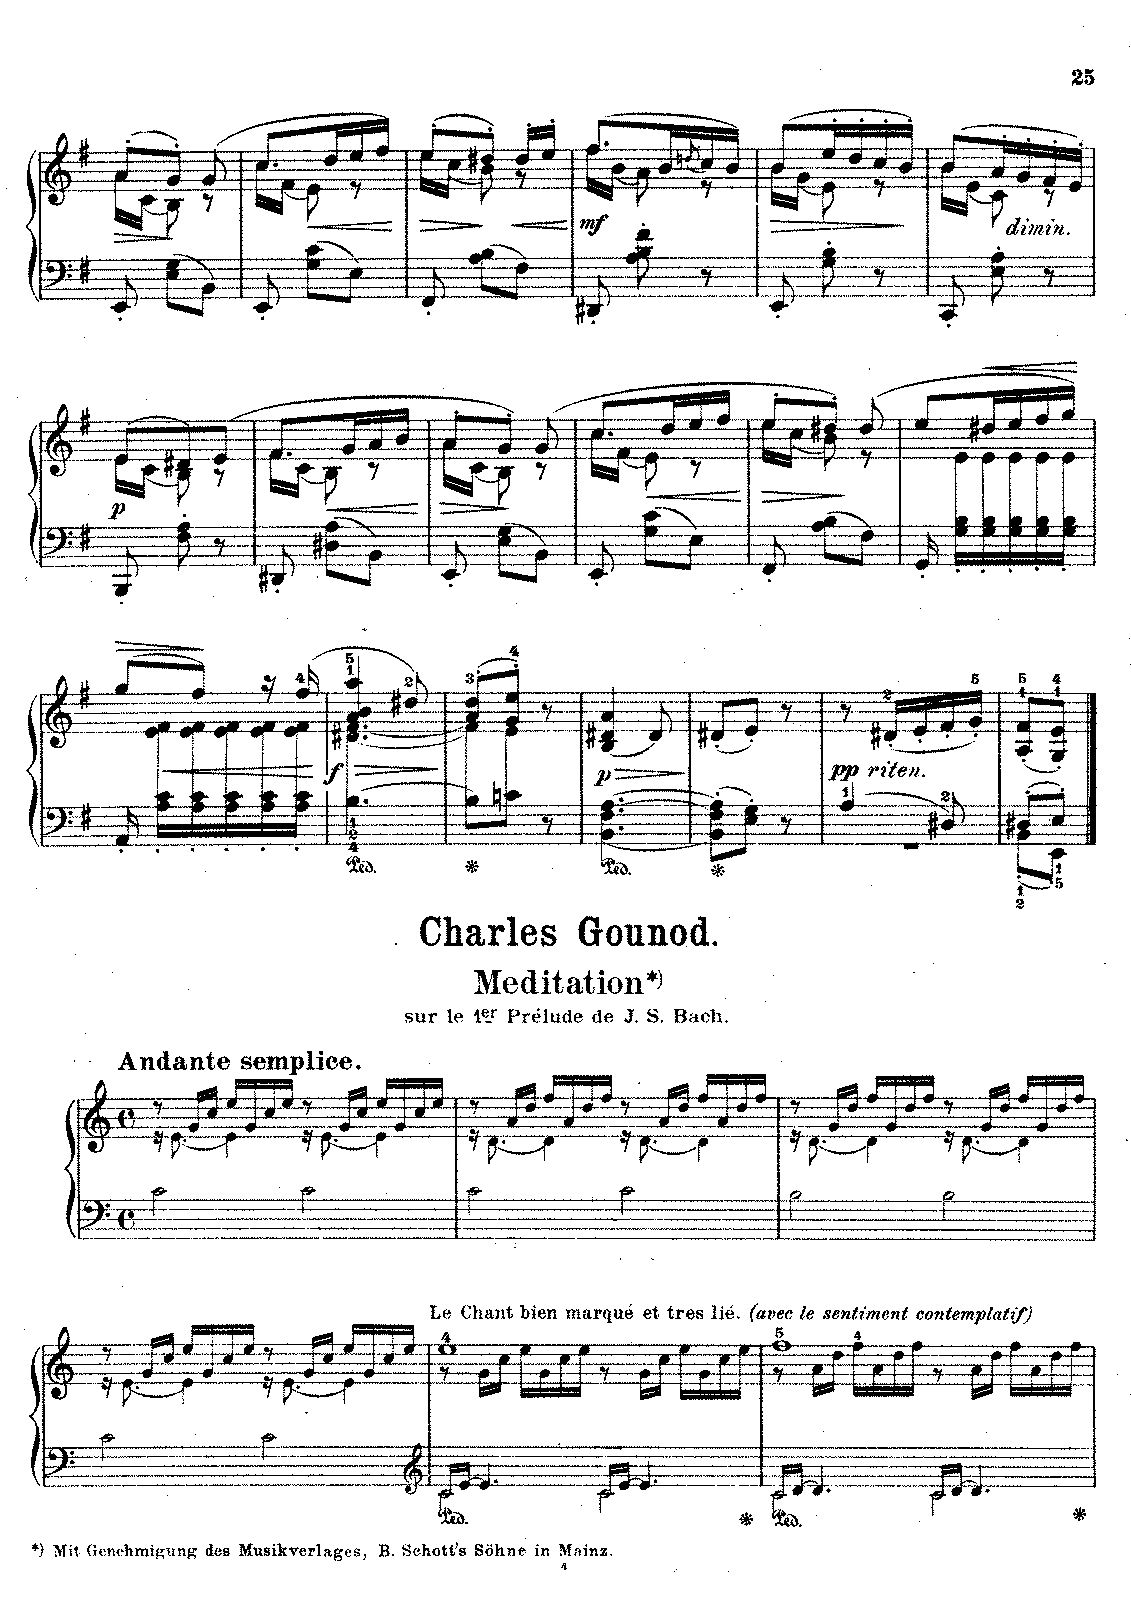 Ave Maria, CG 89 (Gounod, Charles) - IMSLP